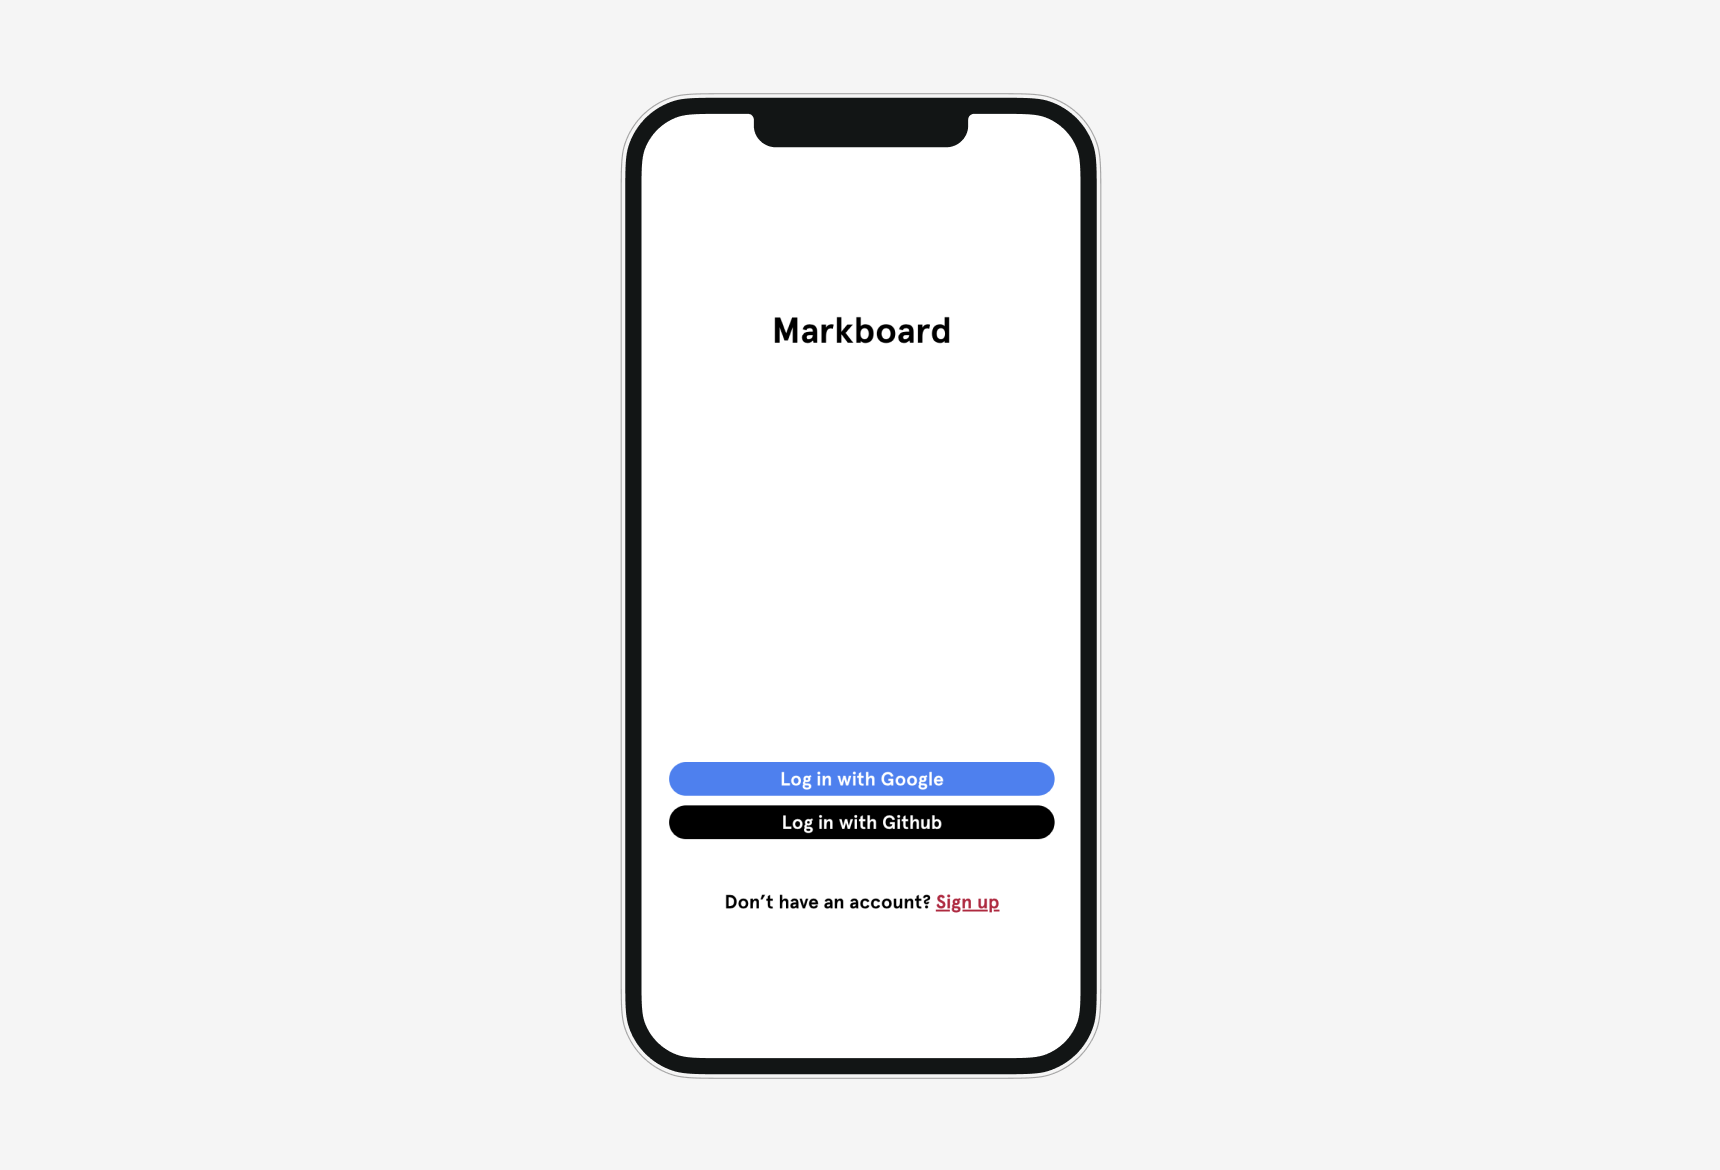 Markboard on an iPhone